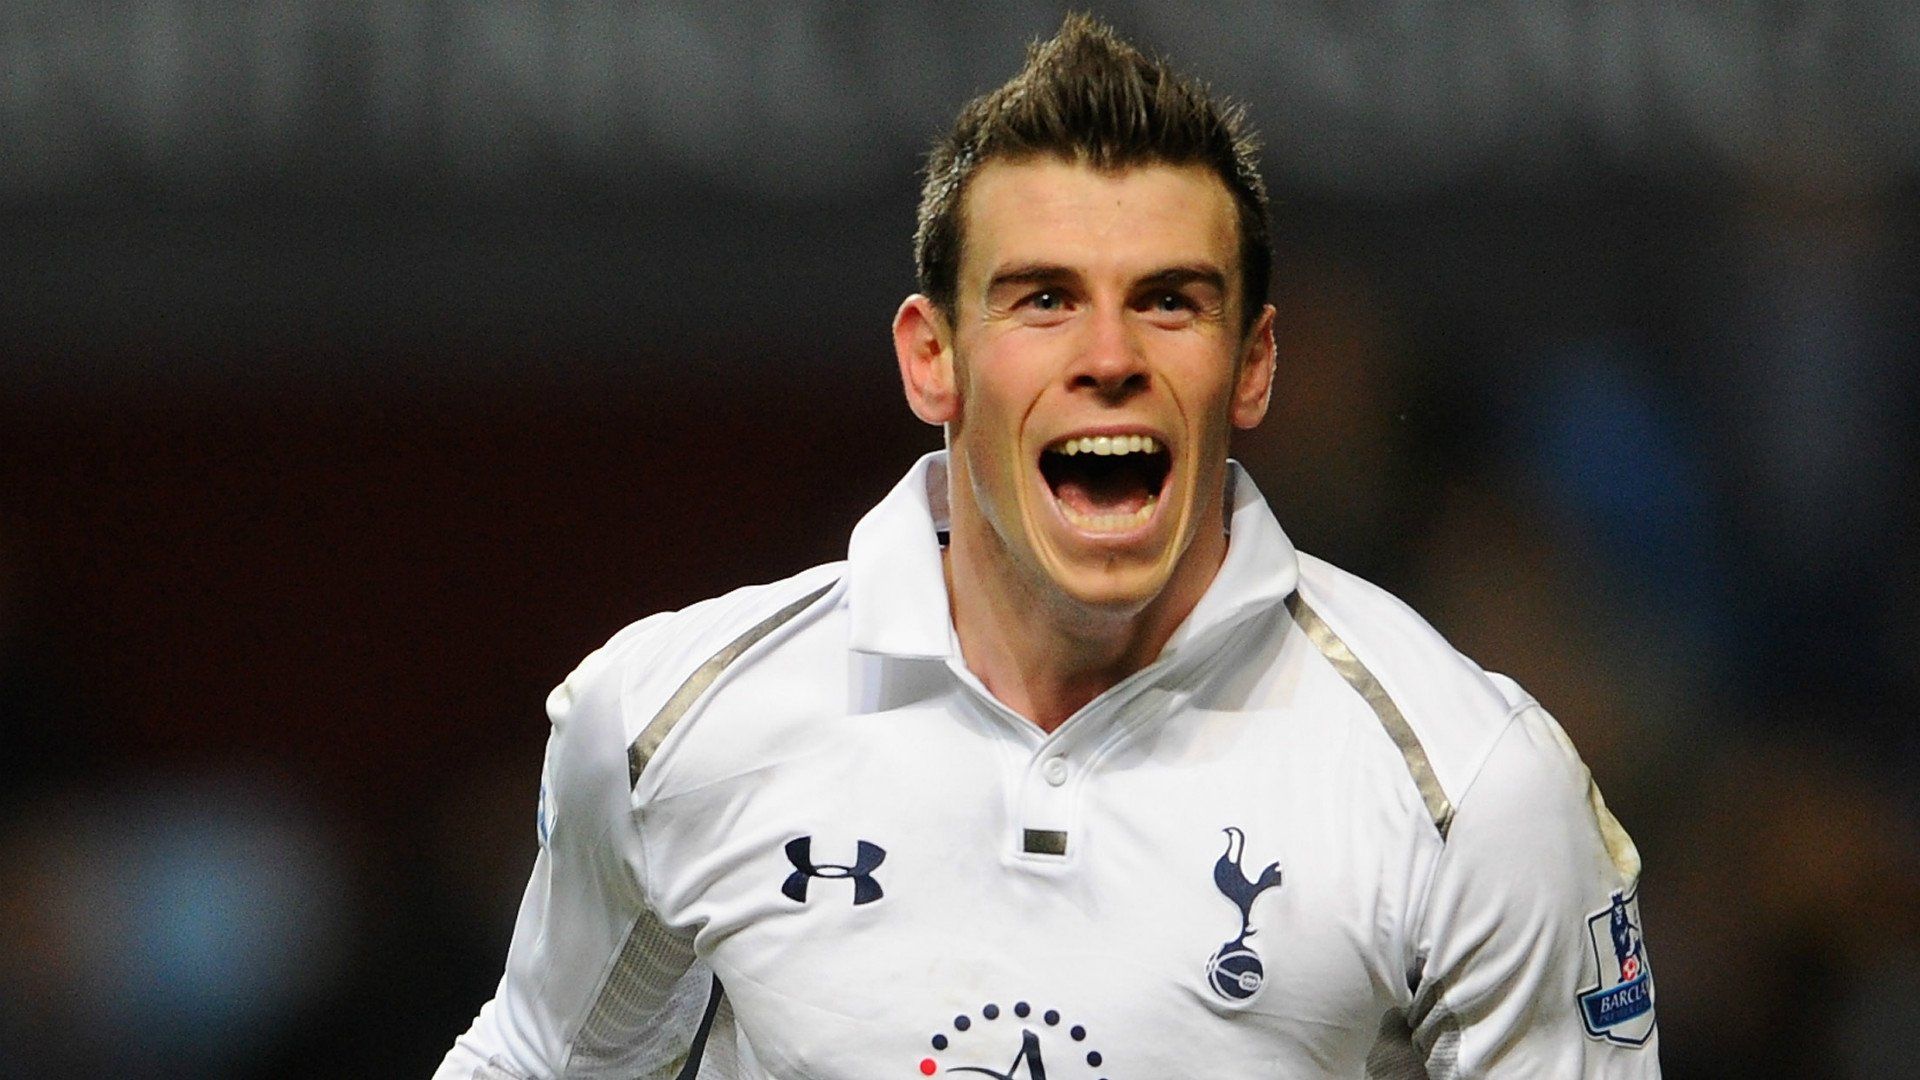 Gareth Bale: Net worth, age, wife Emma Rhys-Jones, career and more